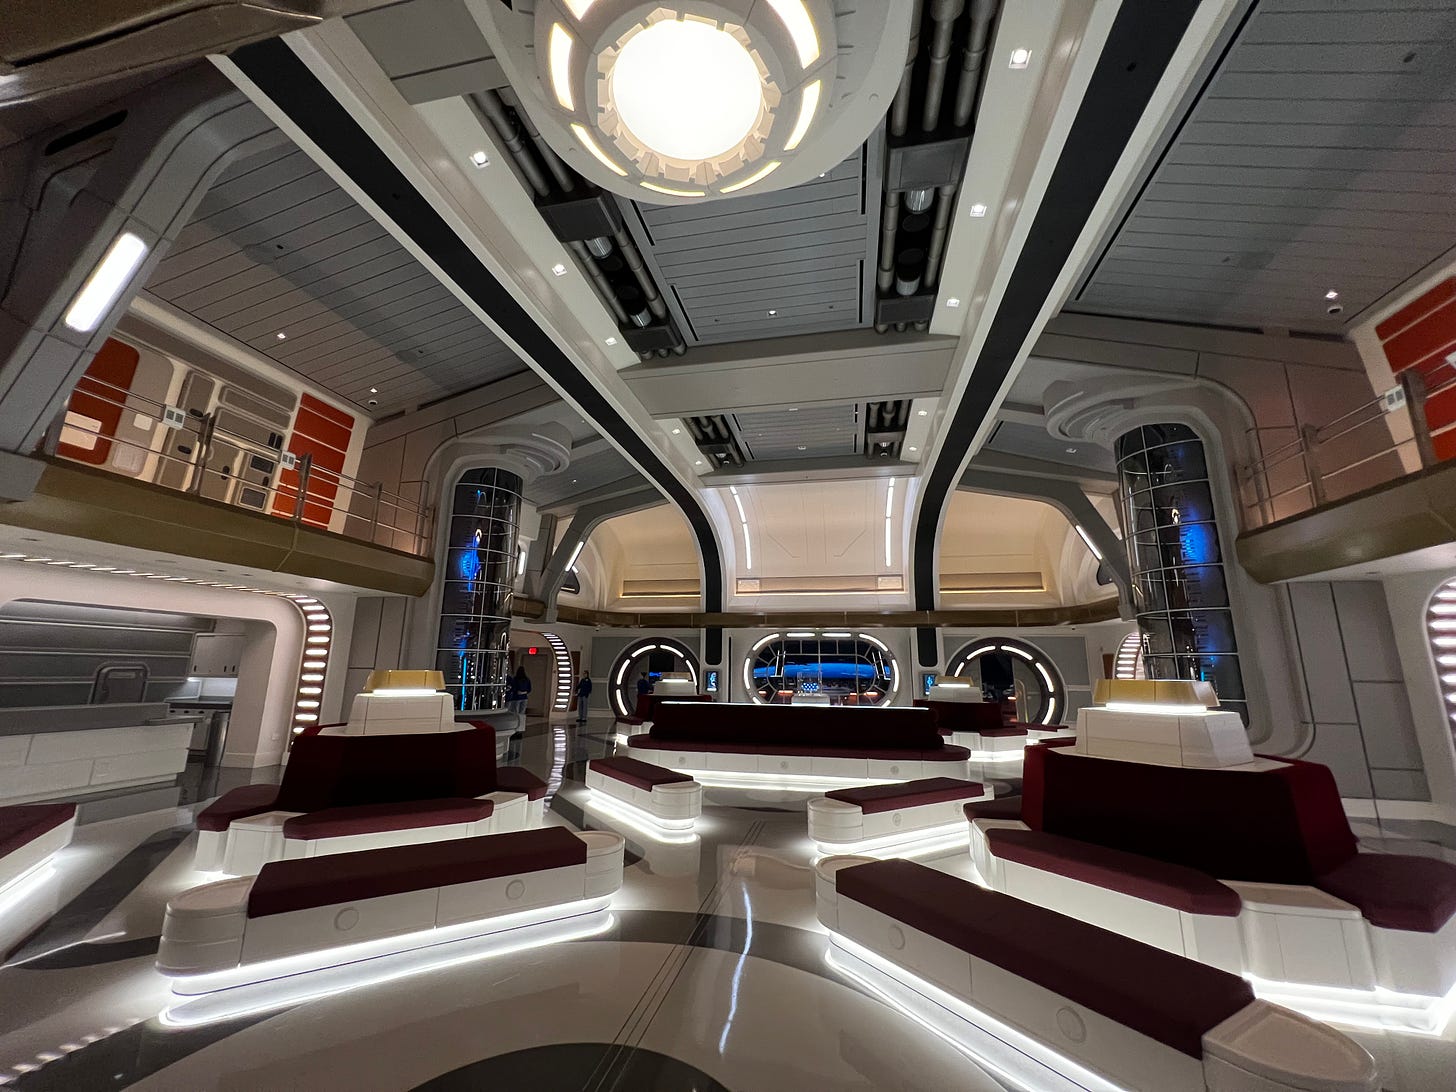 A sci-fi spaceship atrium